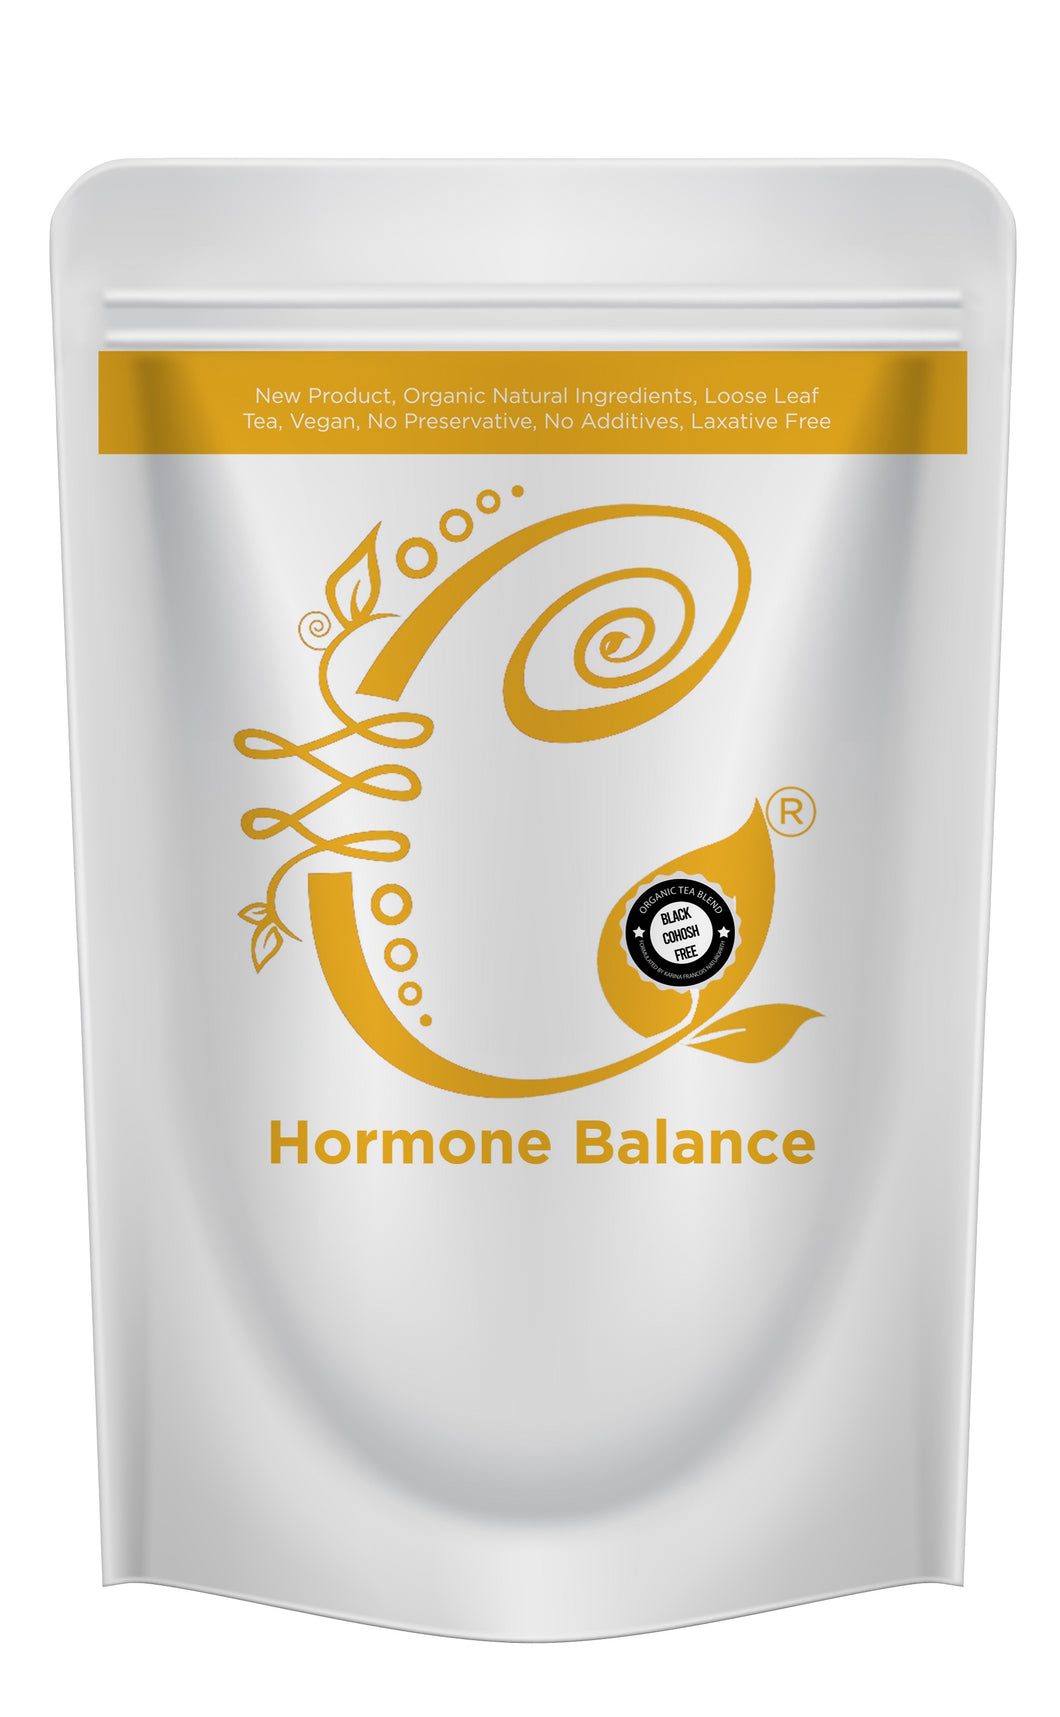 Black Cohosh Free Hormone Balance Tea. 21-Day Organic Tea Blend 28g Sample Pack